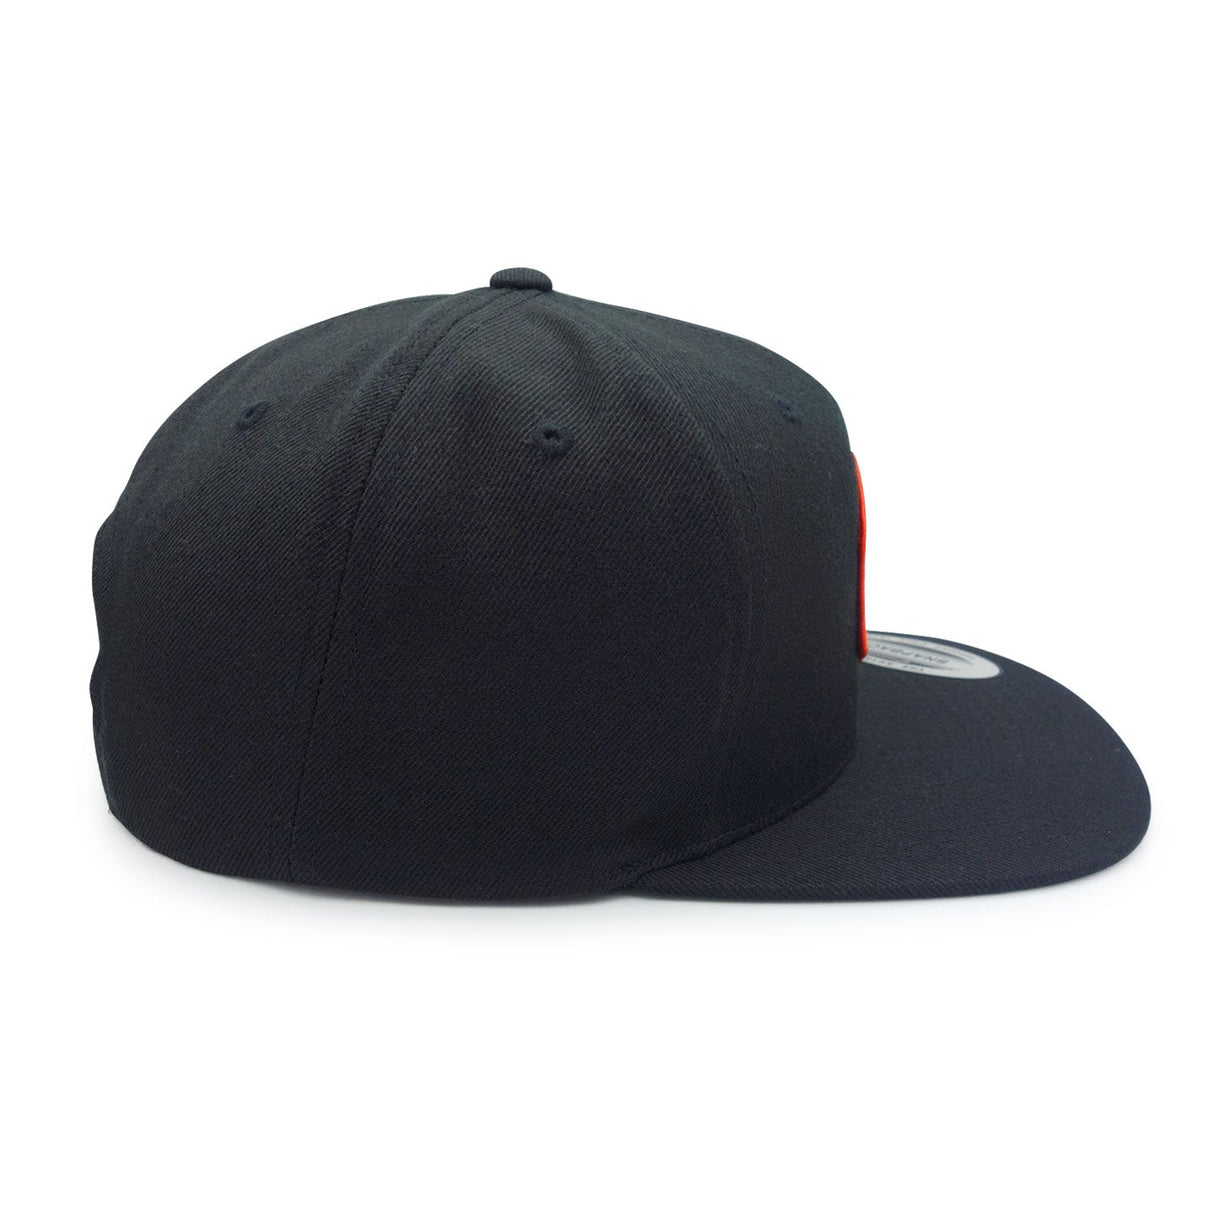 Canadian Made Black Flat Brim Snapback Hat